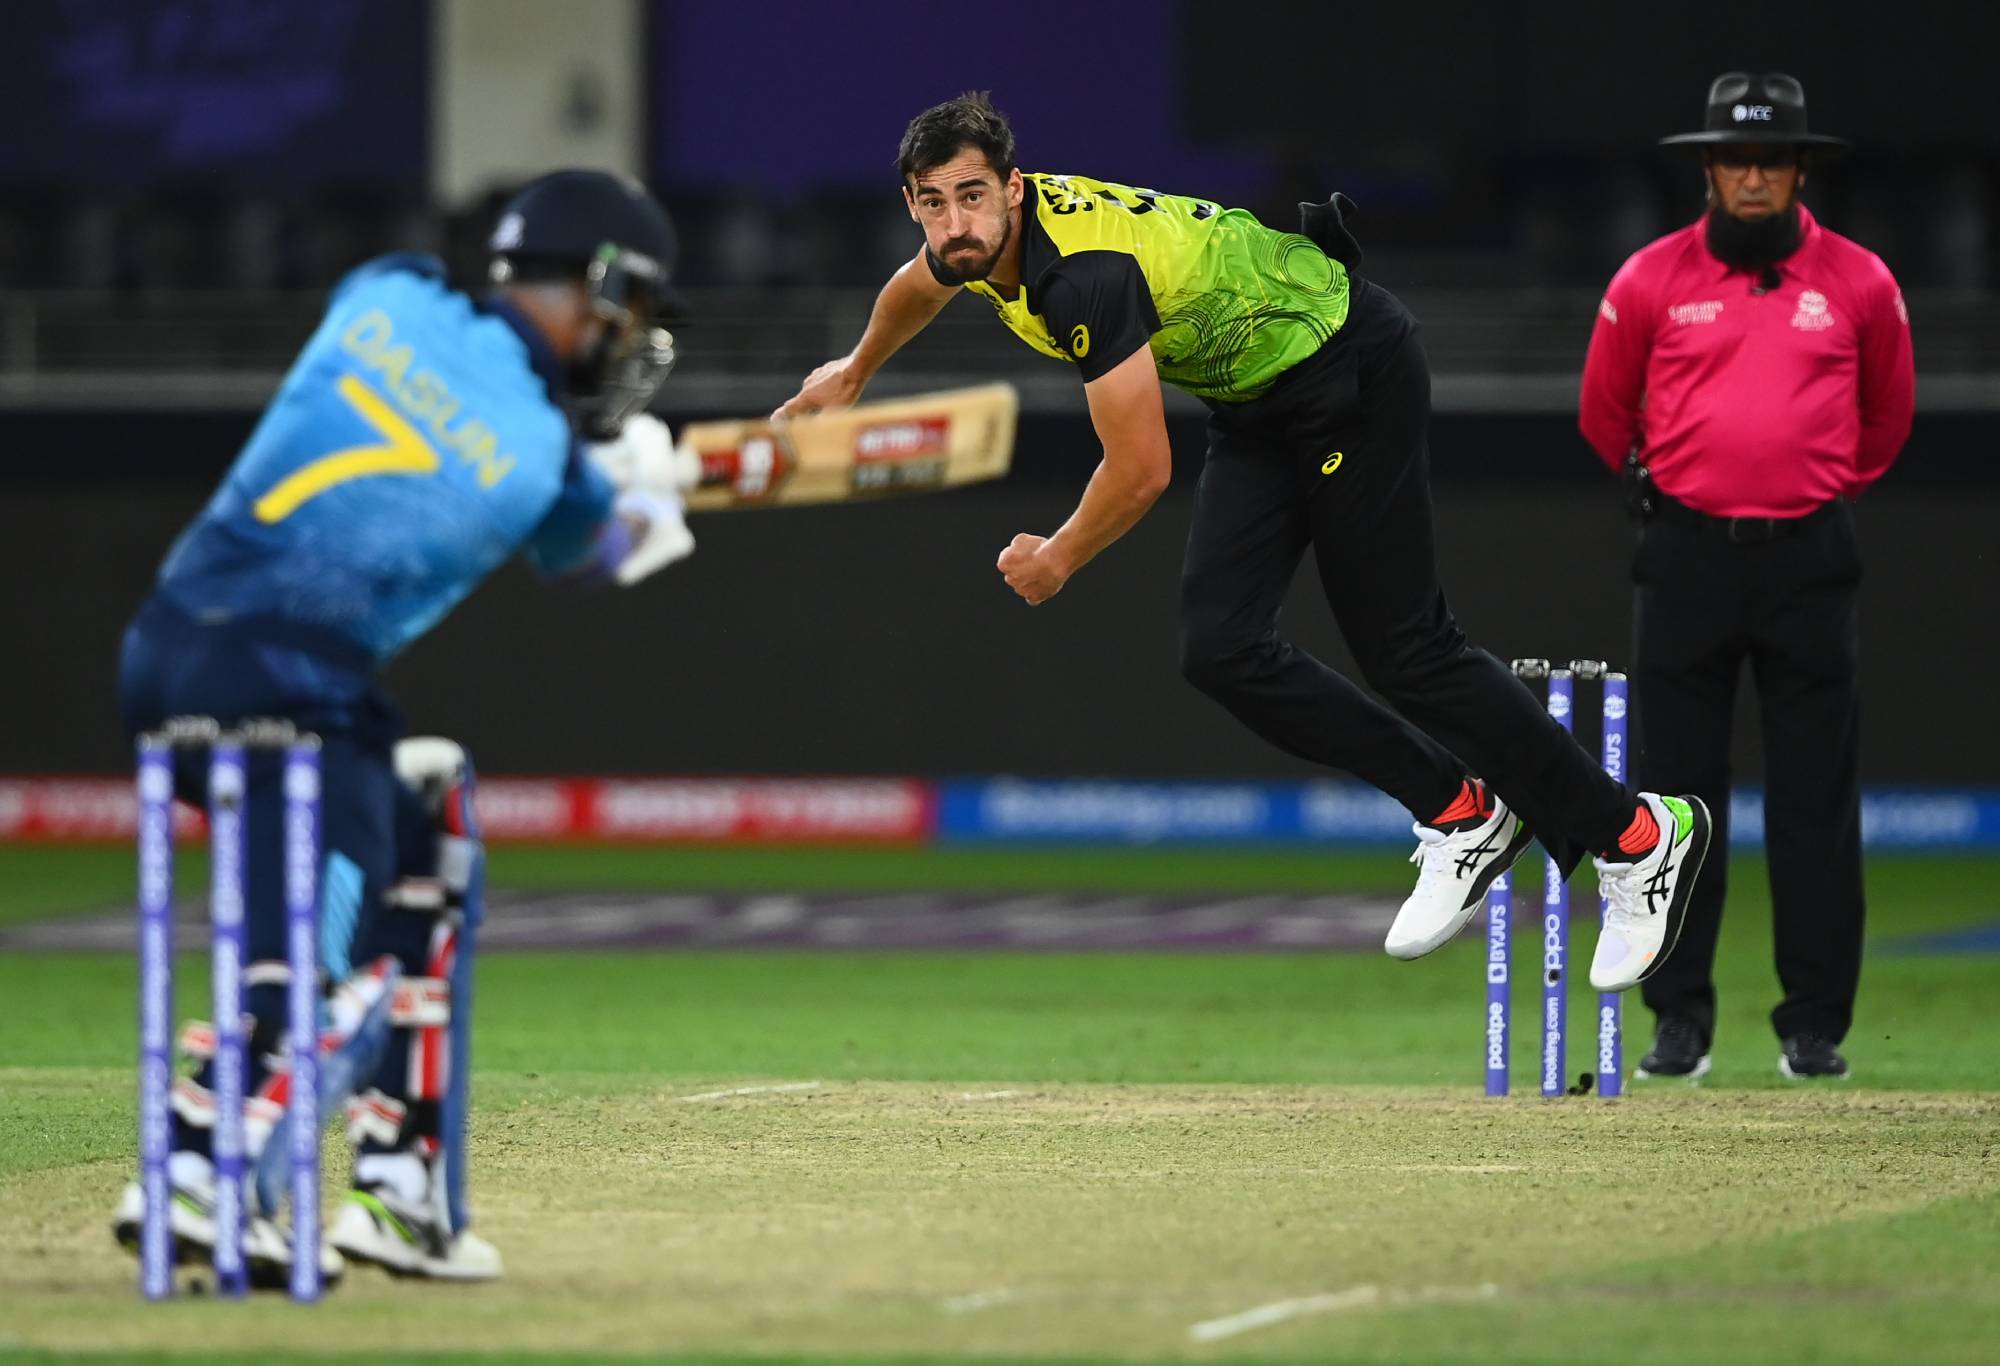 Mitchell Starc bowls against Sri Lanka